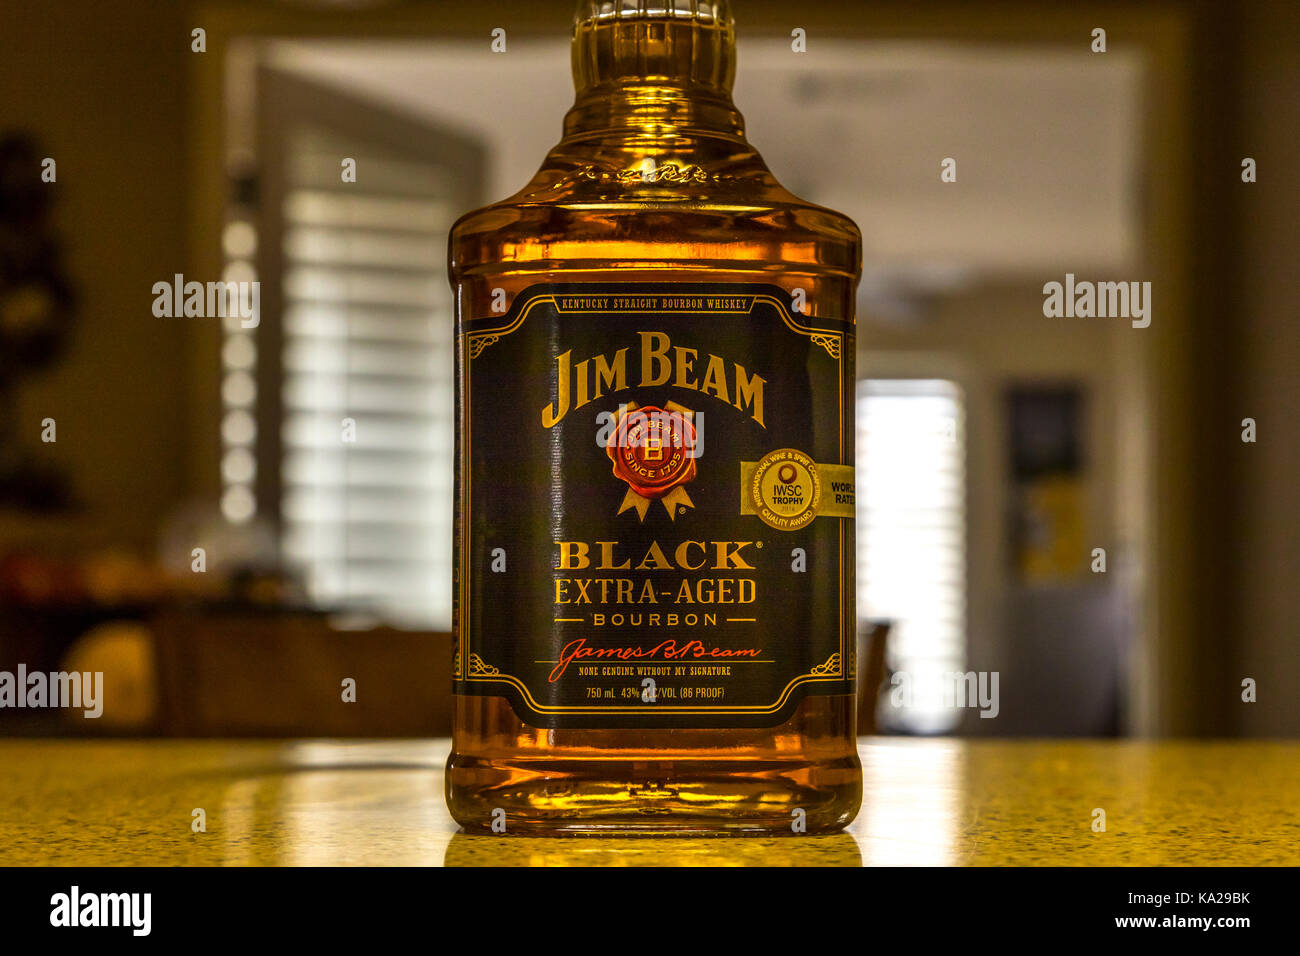 Aged - Black of Whiskey Beam Extra A Photo bottle Jim Stock Bourbon Alamy